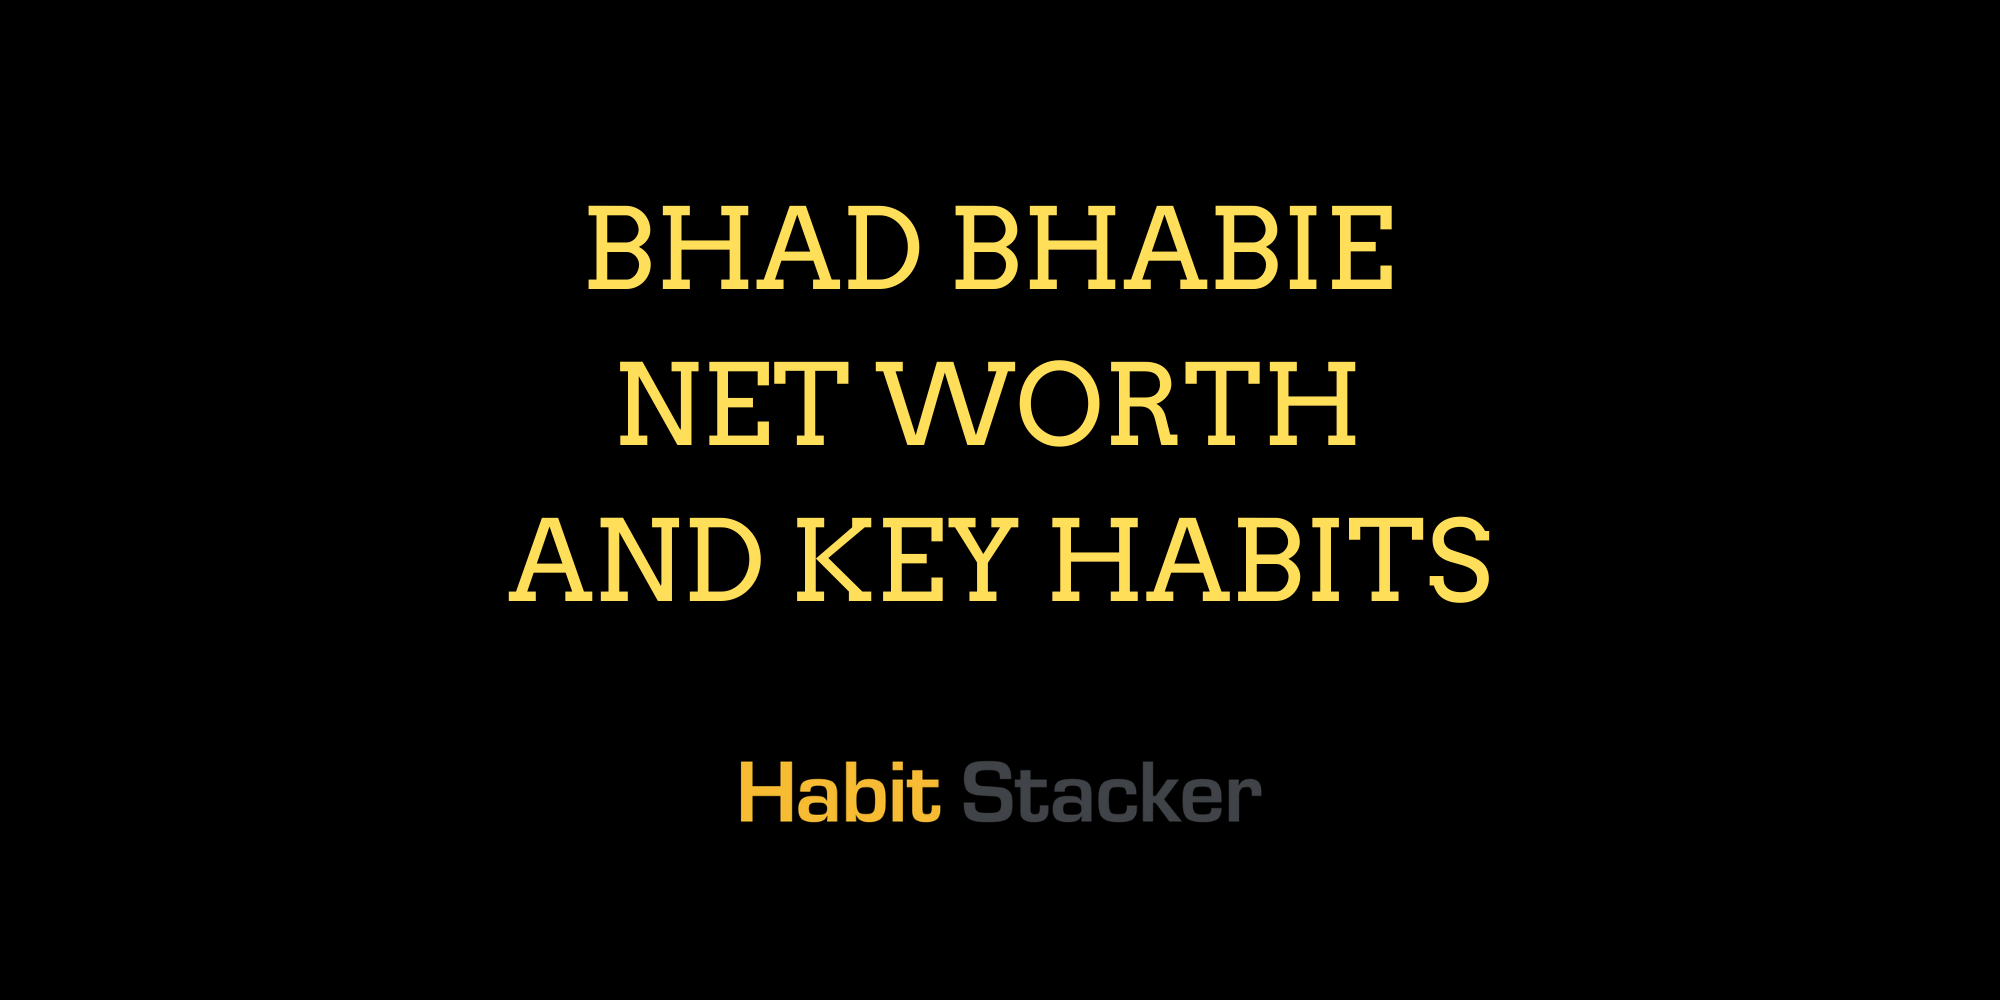 Bhad Bhabie Net Worth and Key Habits